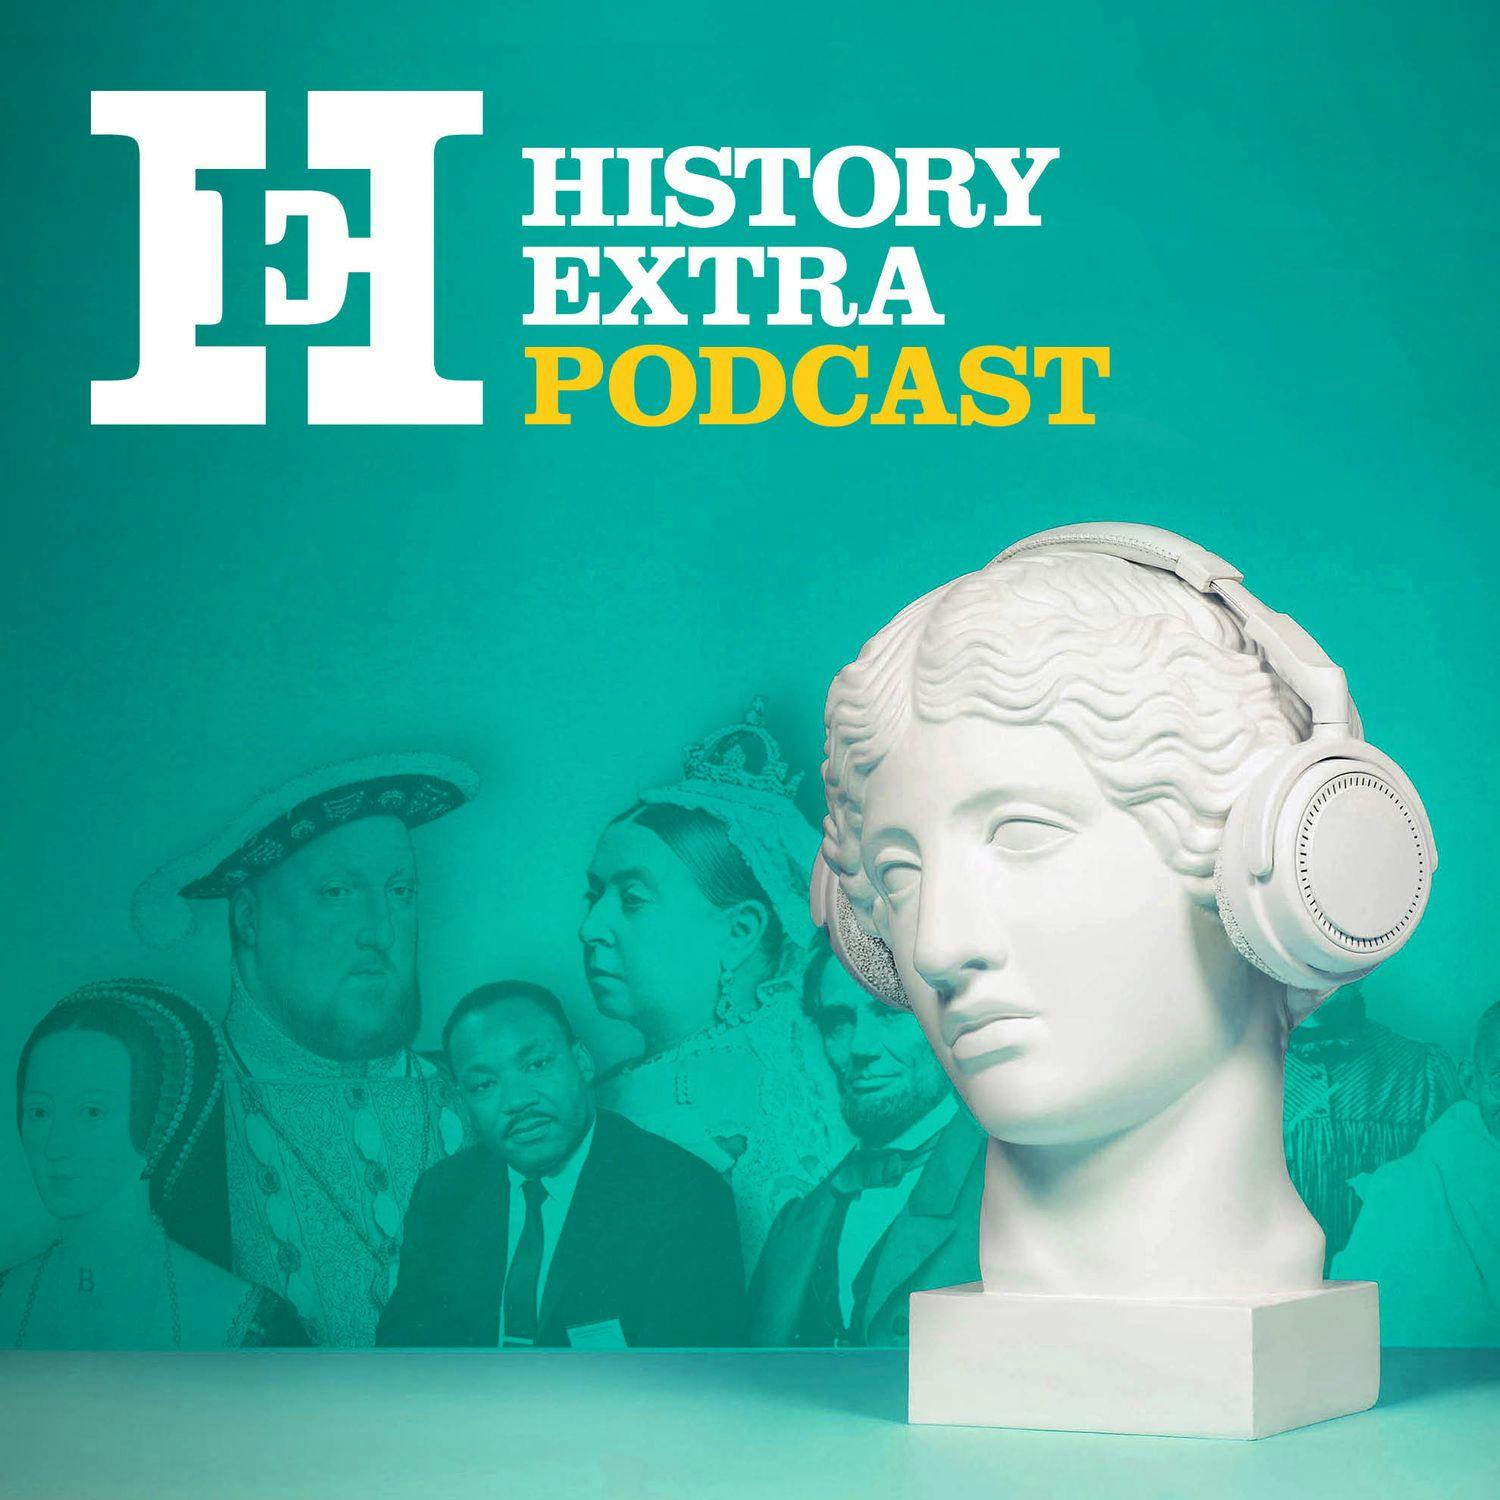 History Extra podcast podcast show image